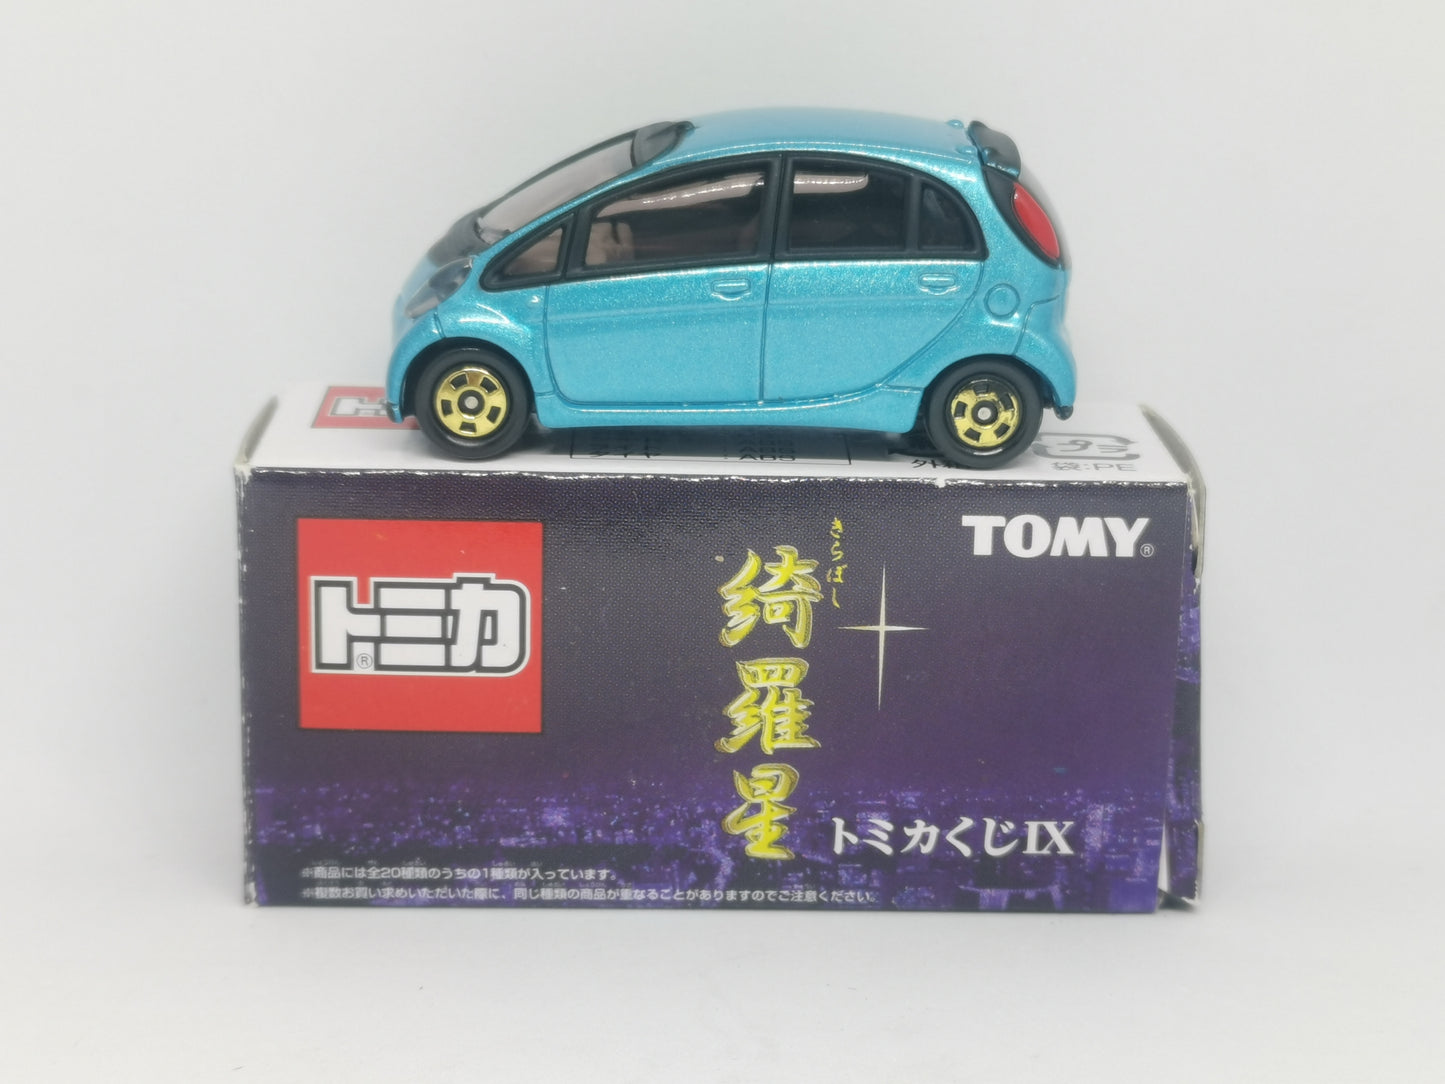 Tomica Lottery Vol. 4 Kirasei Mitsubishi i